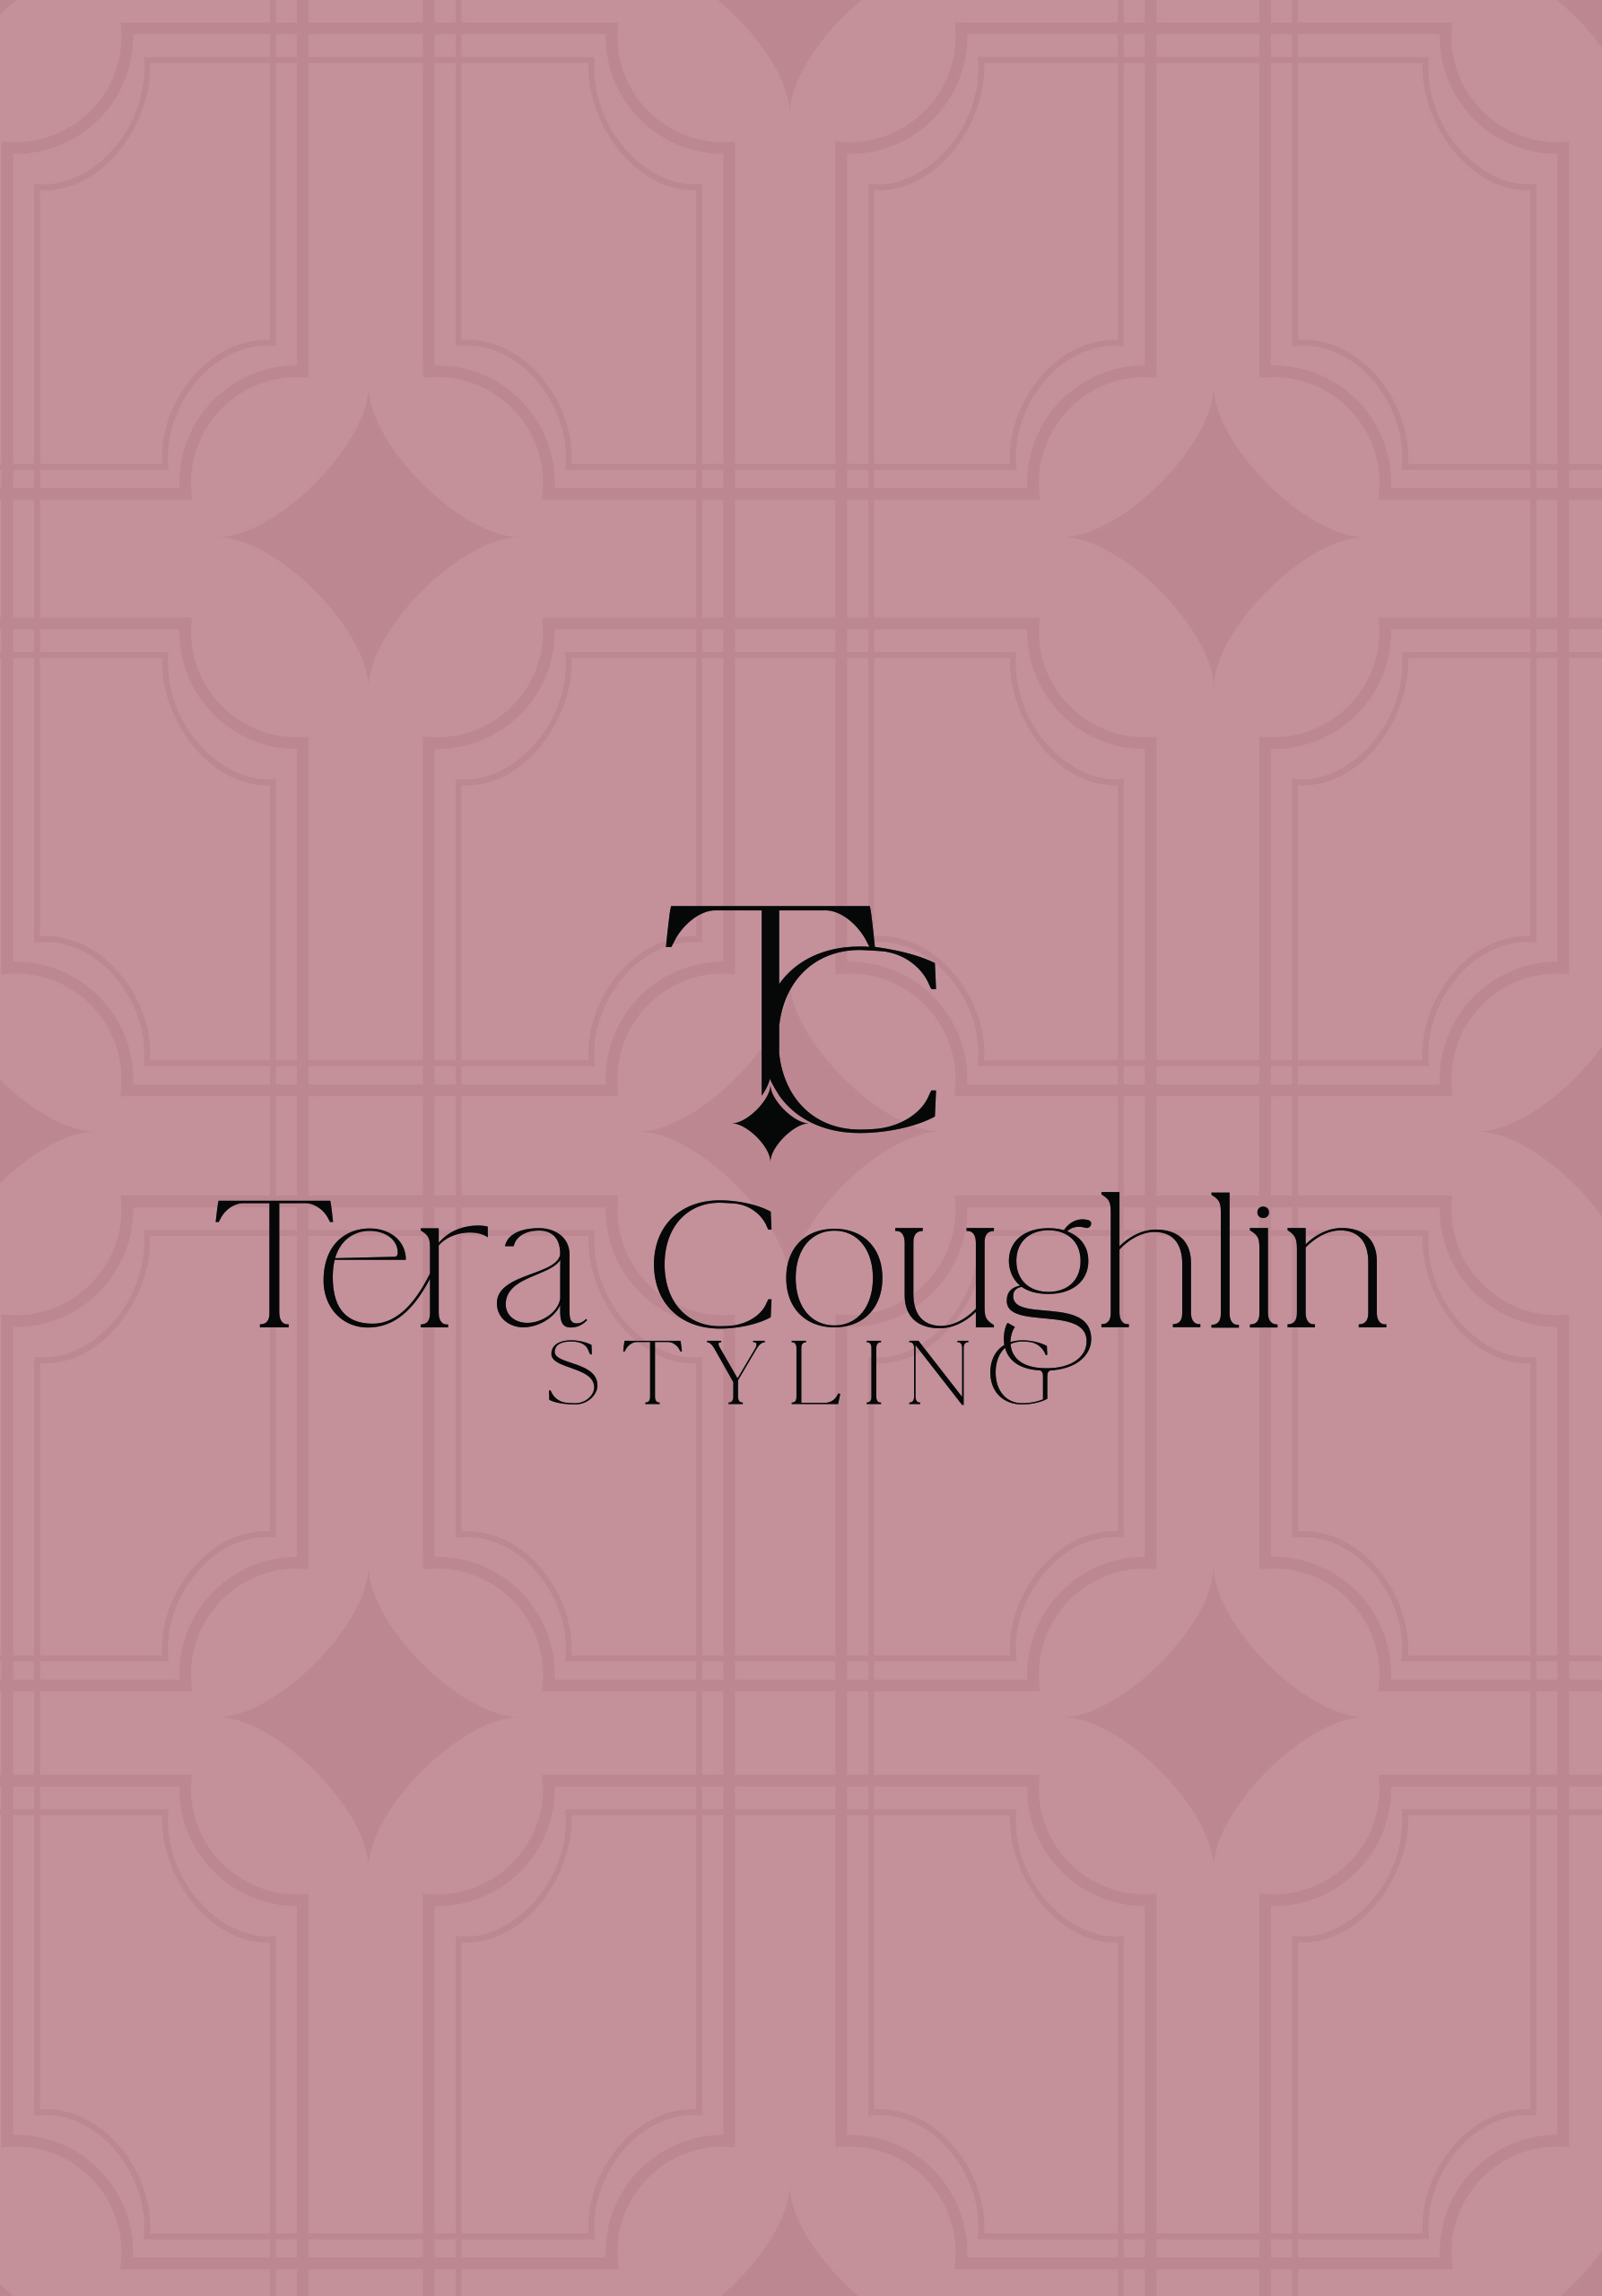 Tera Coughlin Styling Logo 1